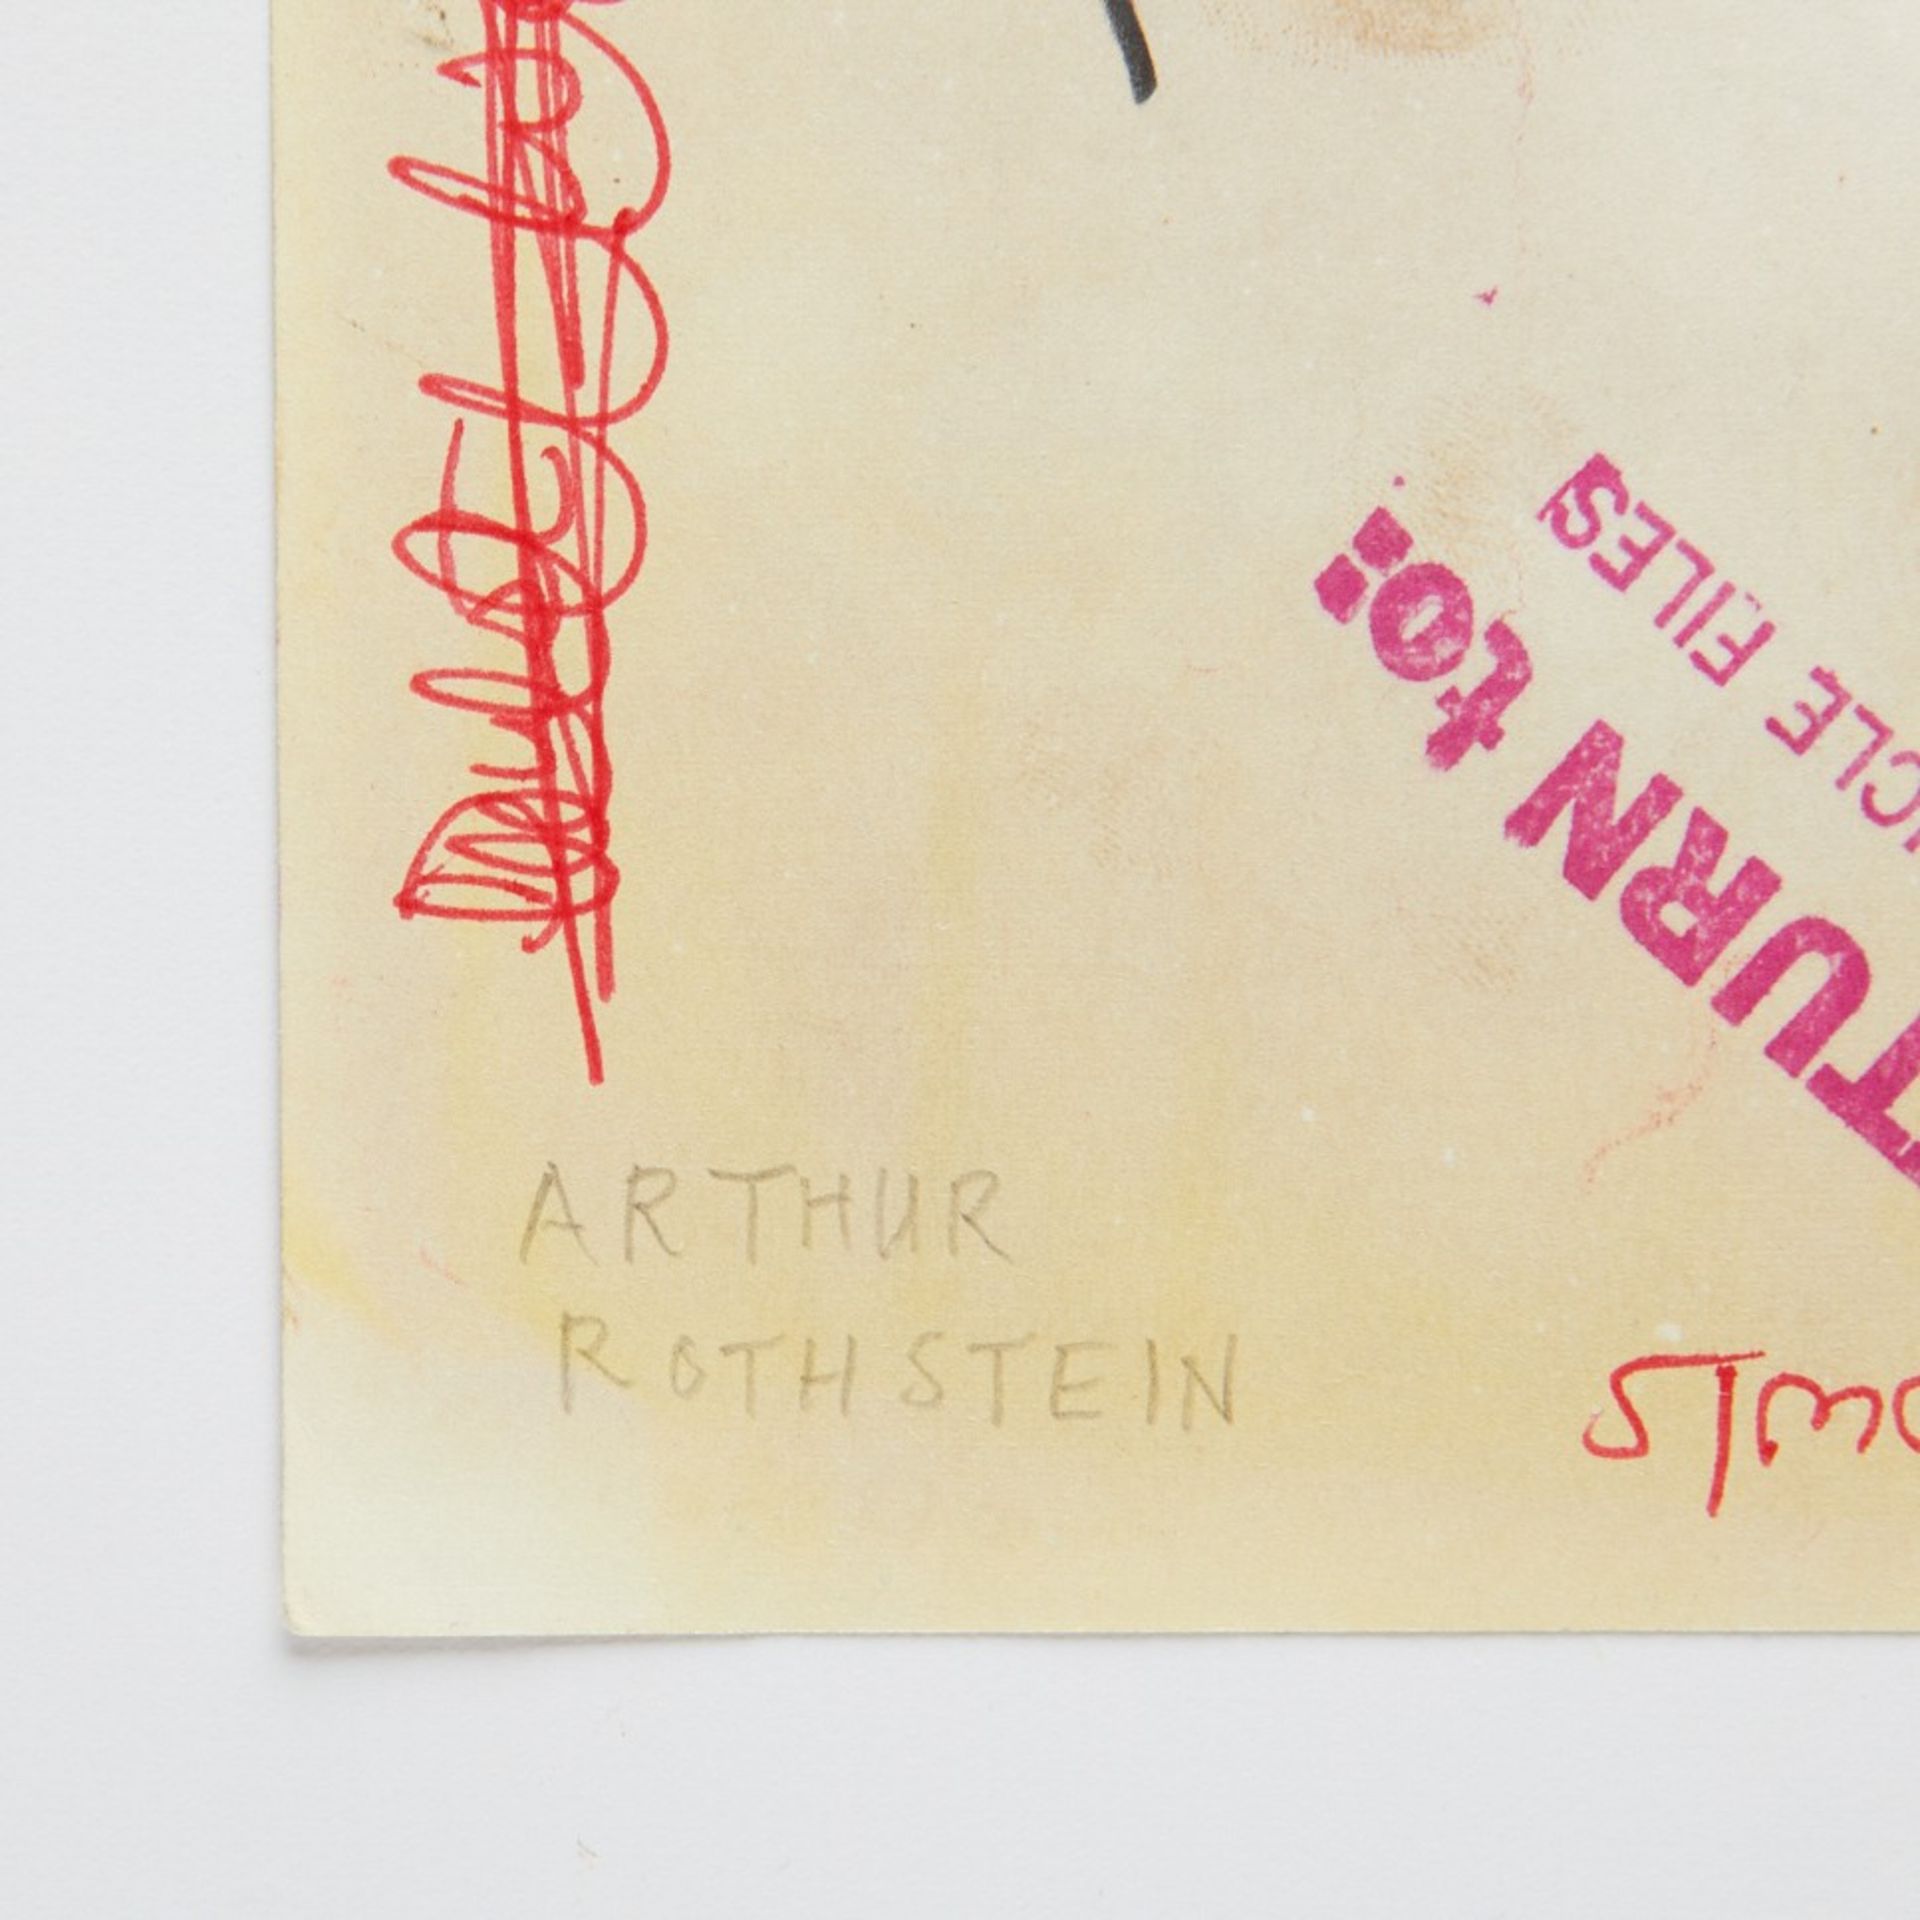 Arthur Rothstein "Dust Storm" Silver Gelatin Print - Image 4 of 6